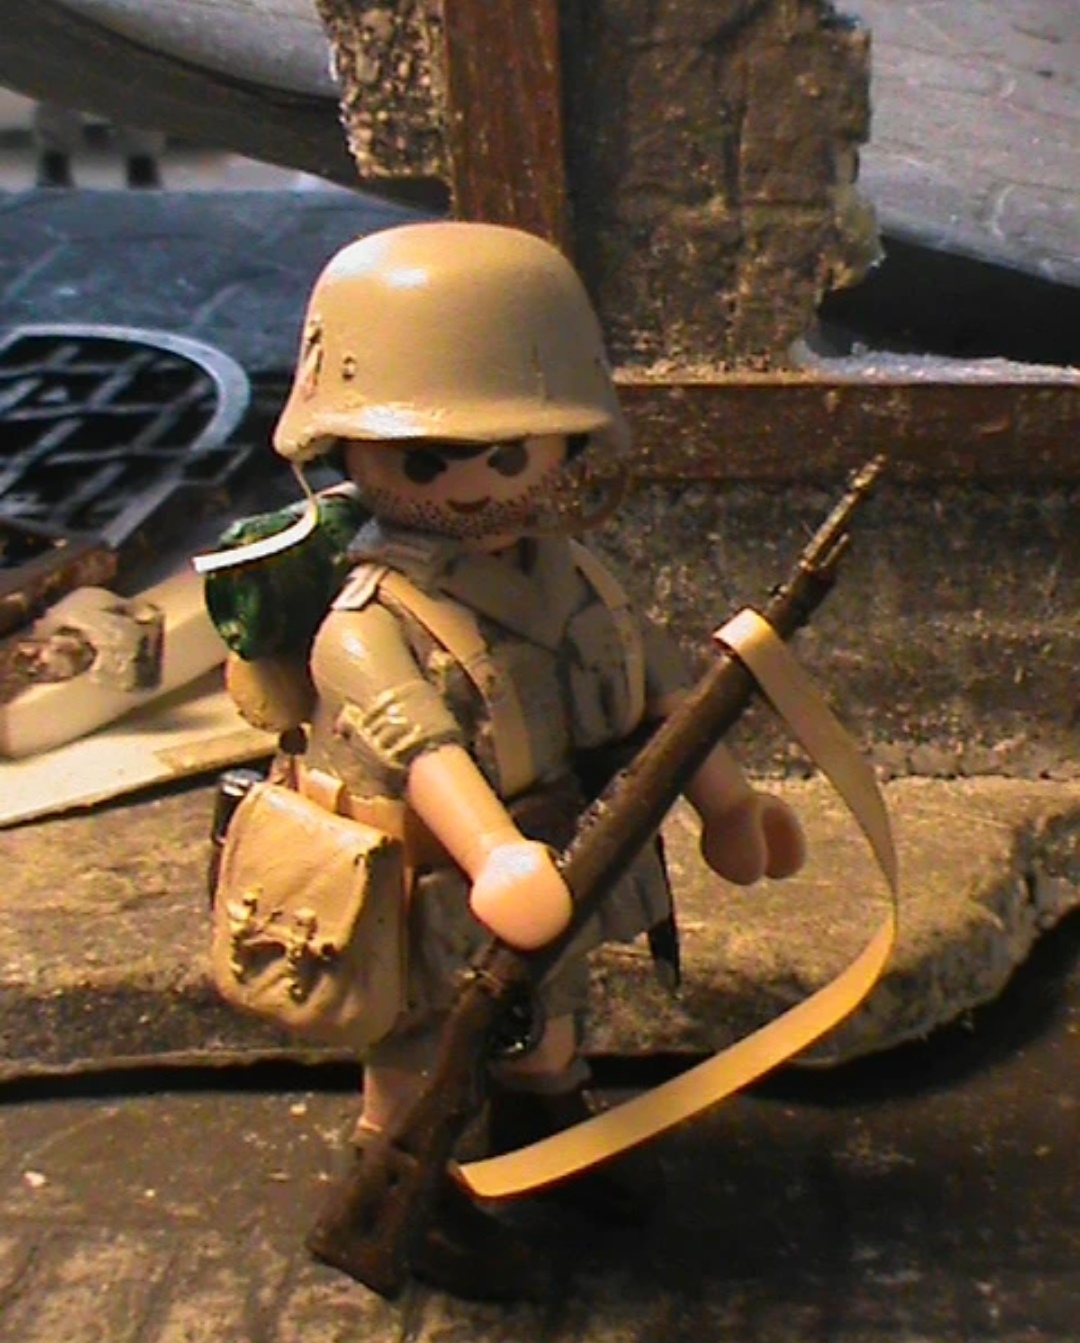 WW2 in Playmobil